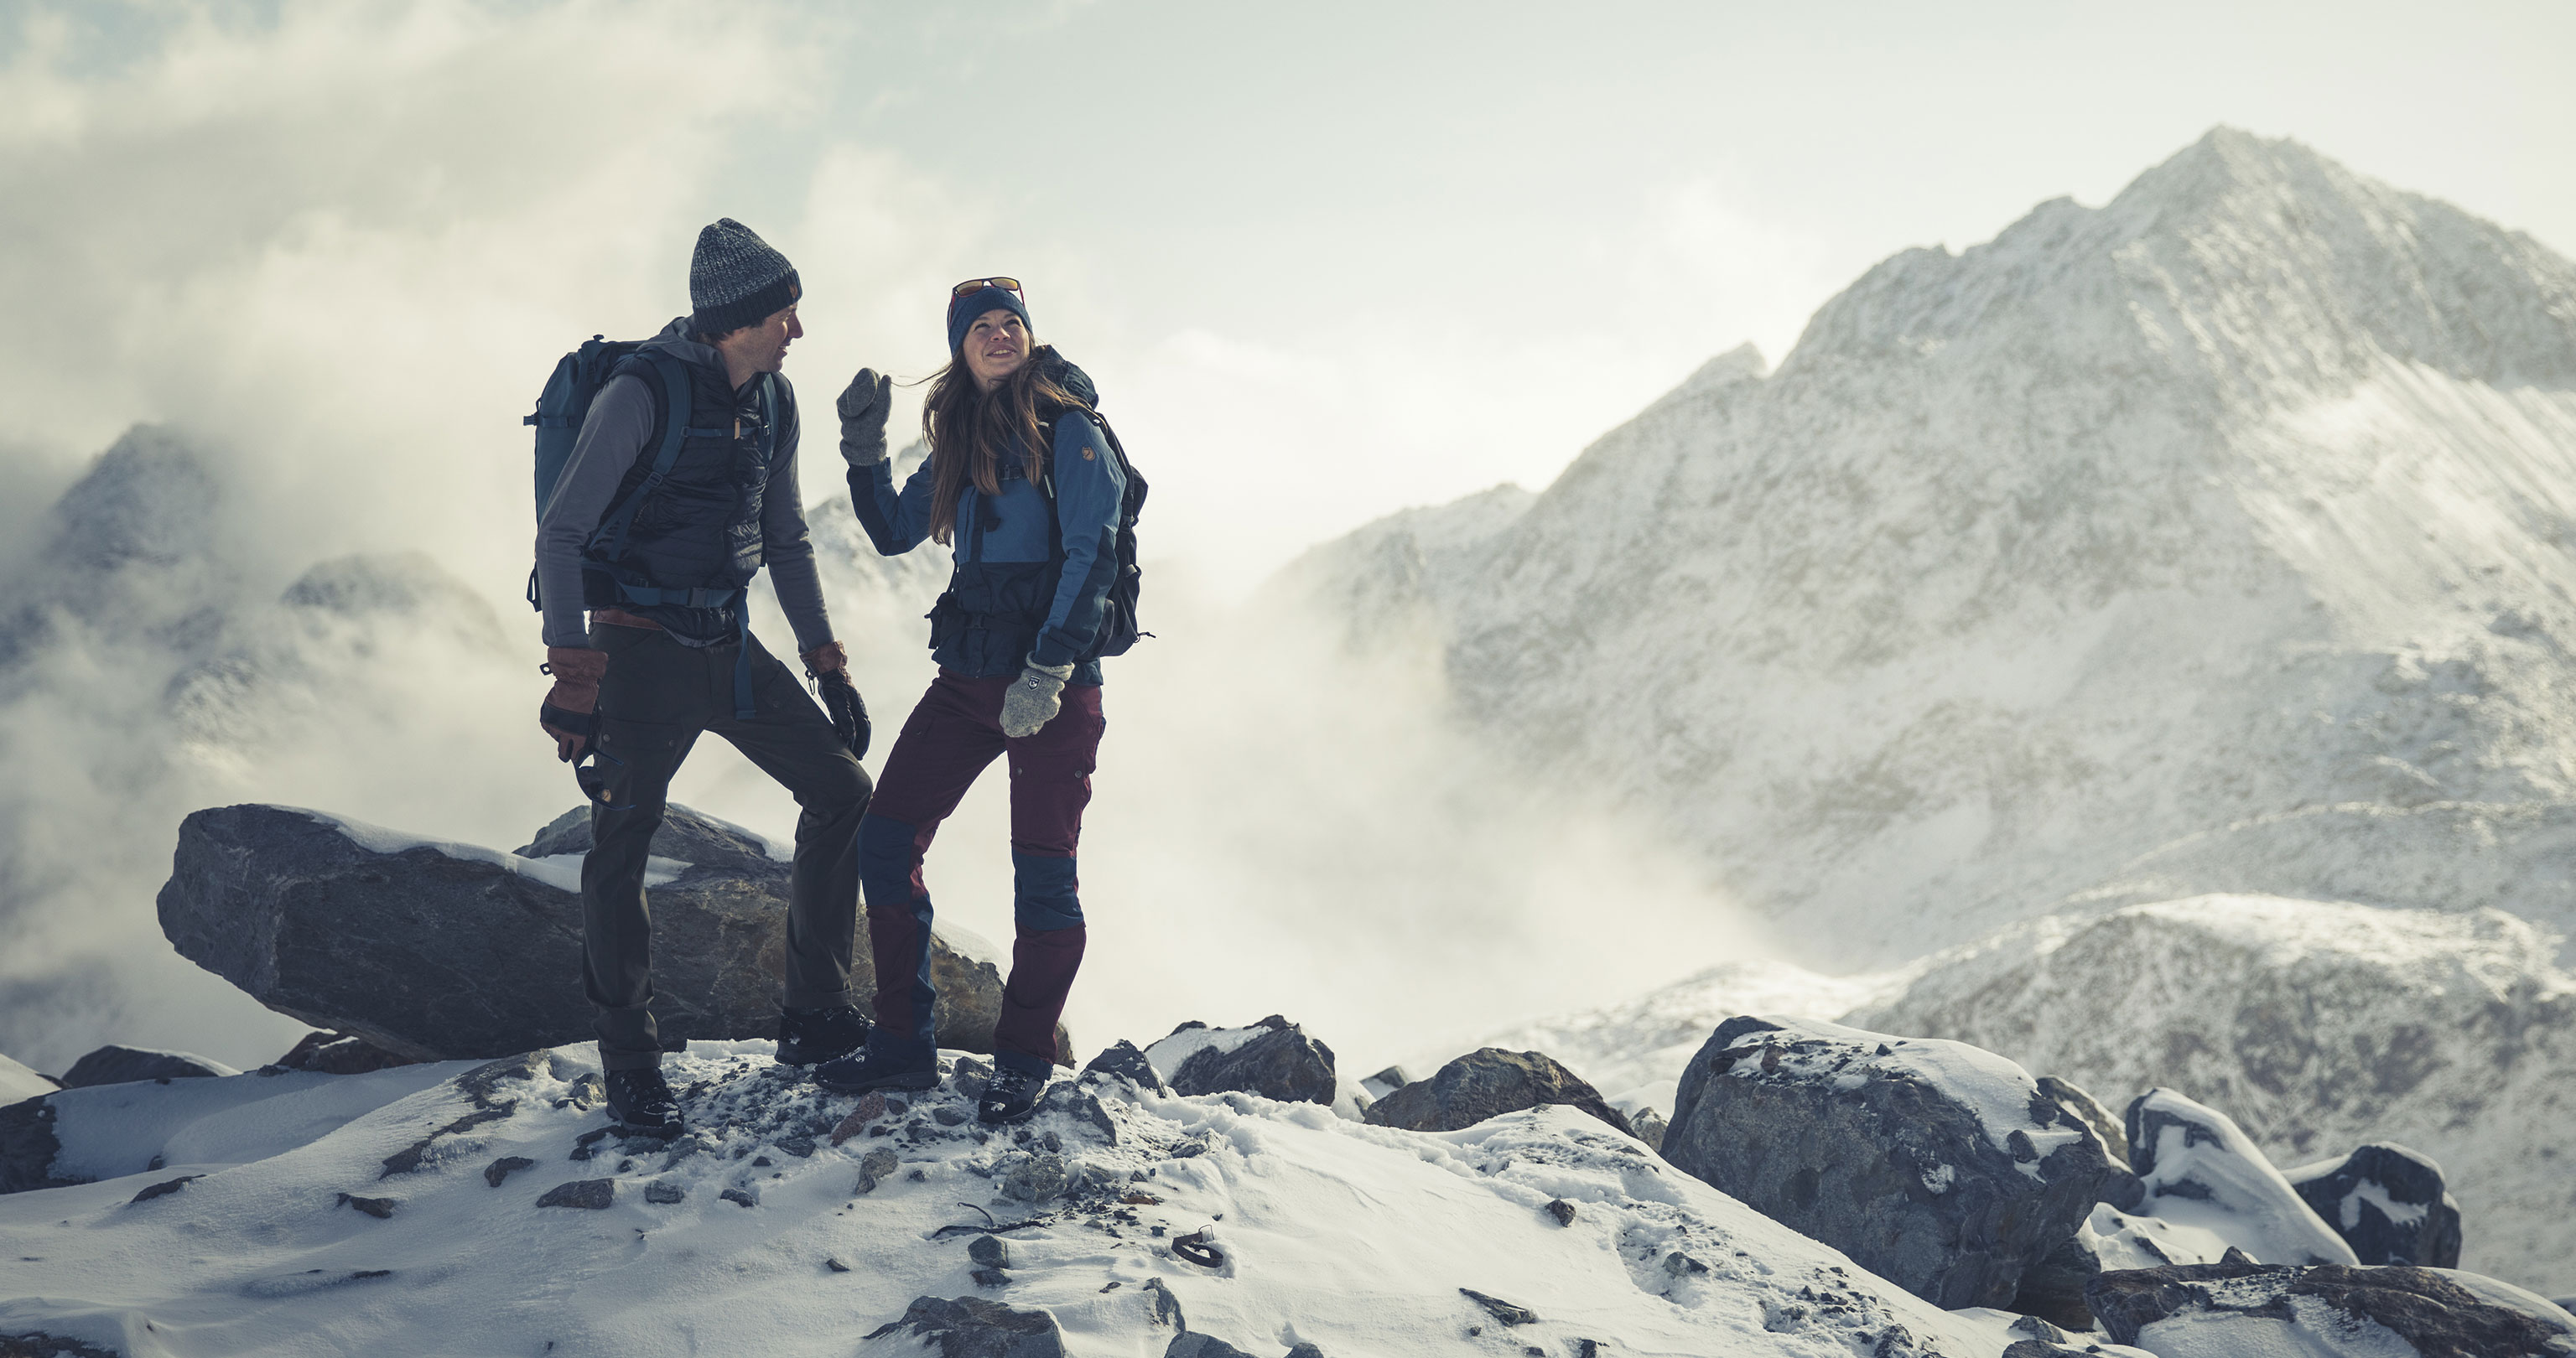 A couple wearing warm walking shoes from Hanwag in snowy mountain terrain